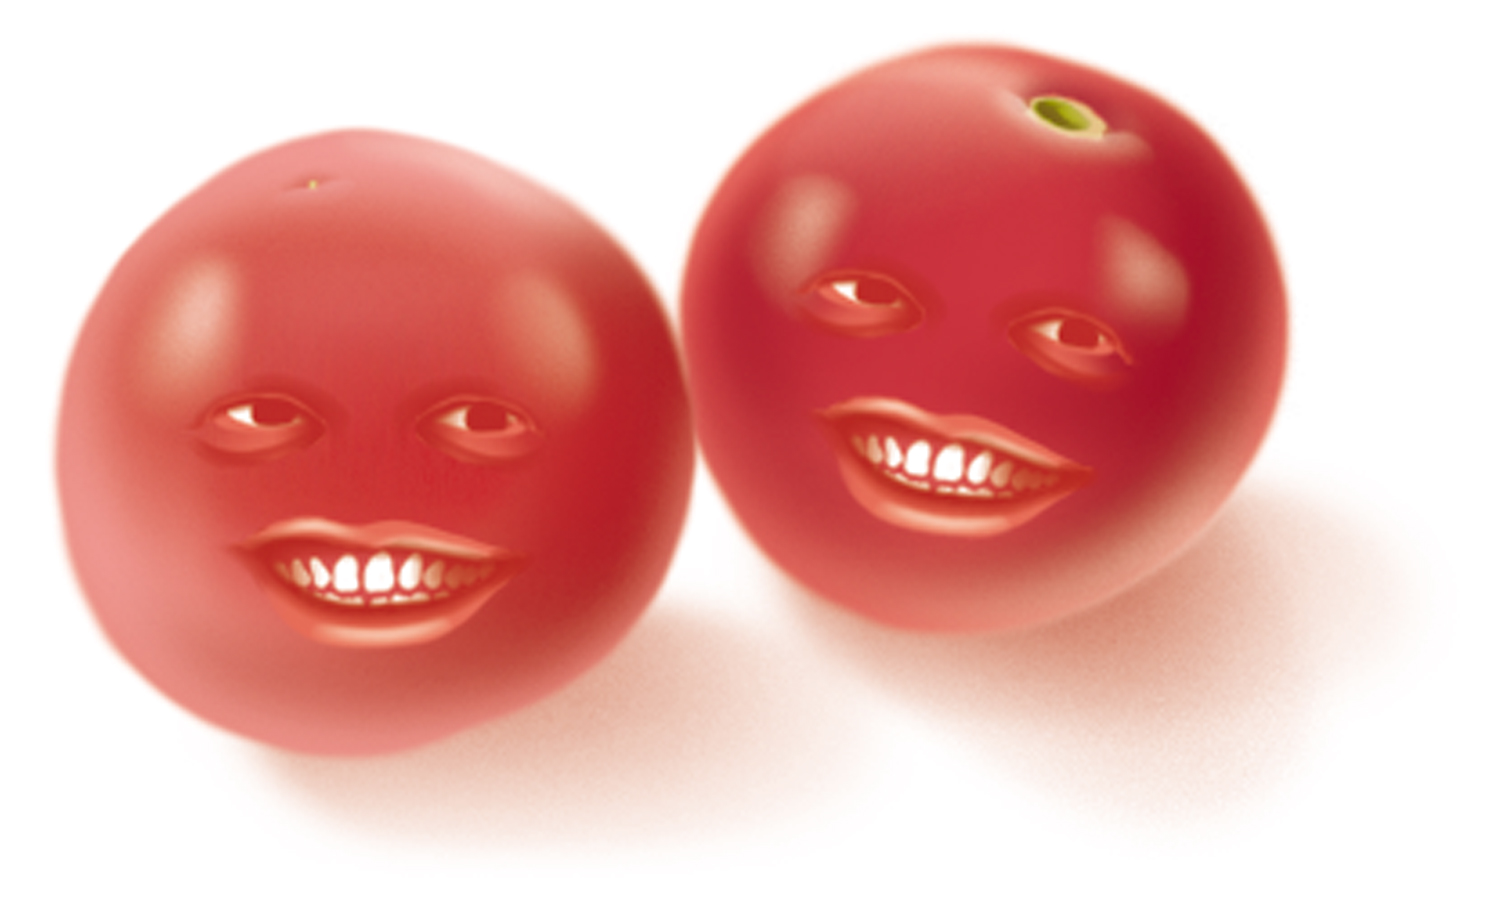 Cheery Tomatoes. August 2015.